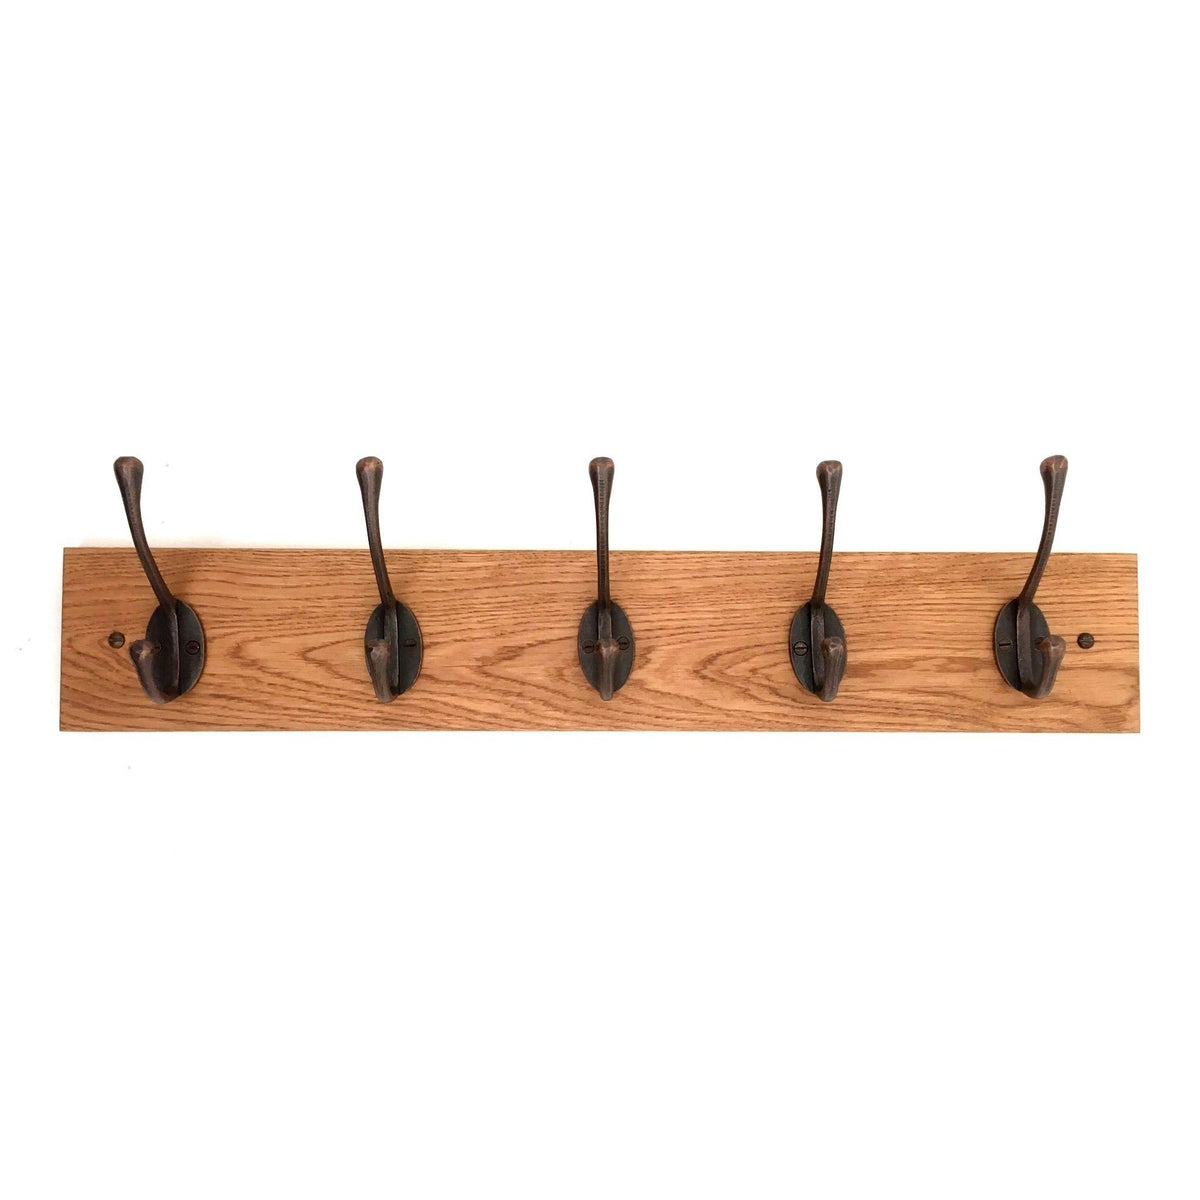 FOWLERS Handmade OAK wooden coat rack - ACORN CAST IRON HOOKS